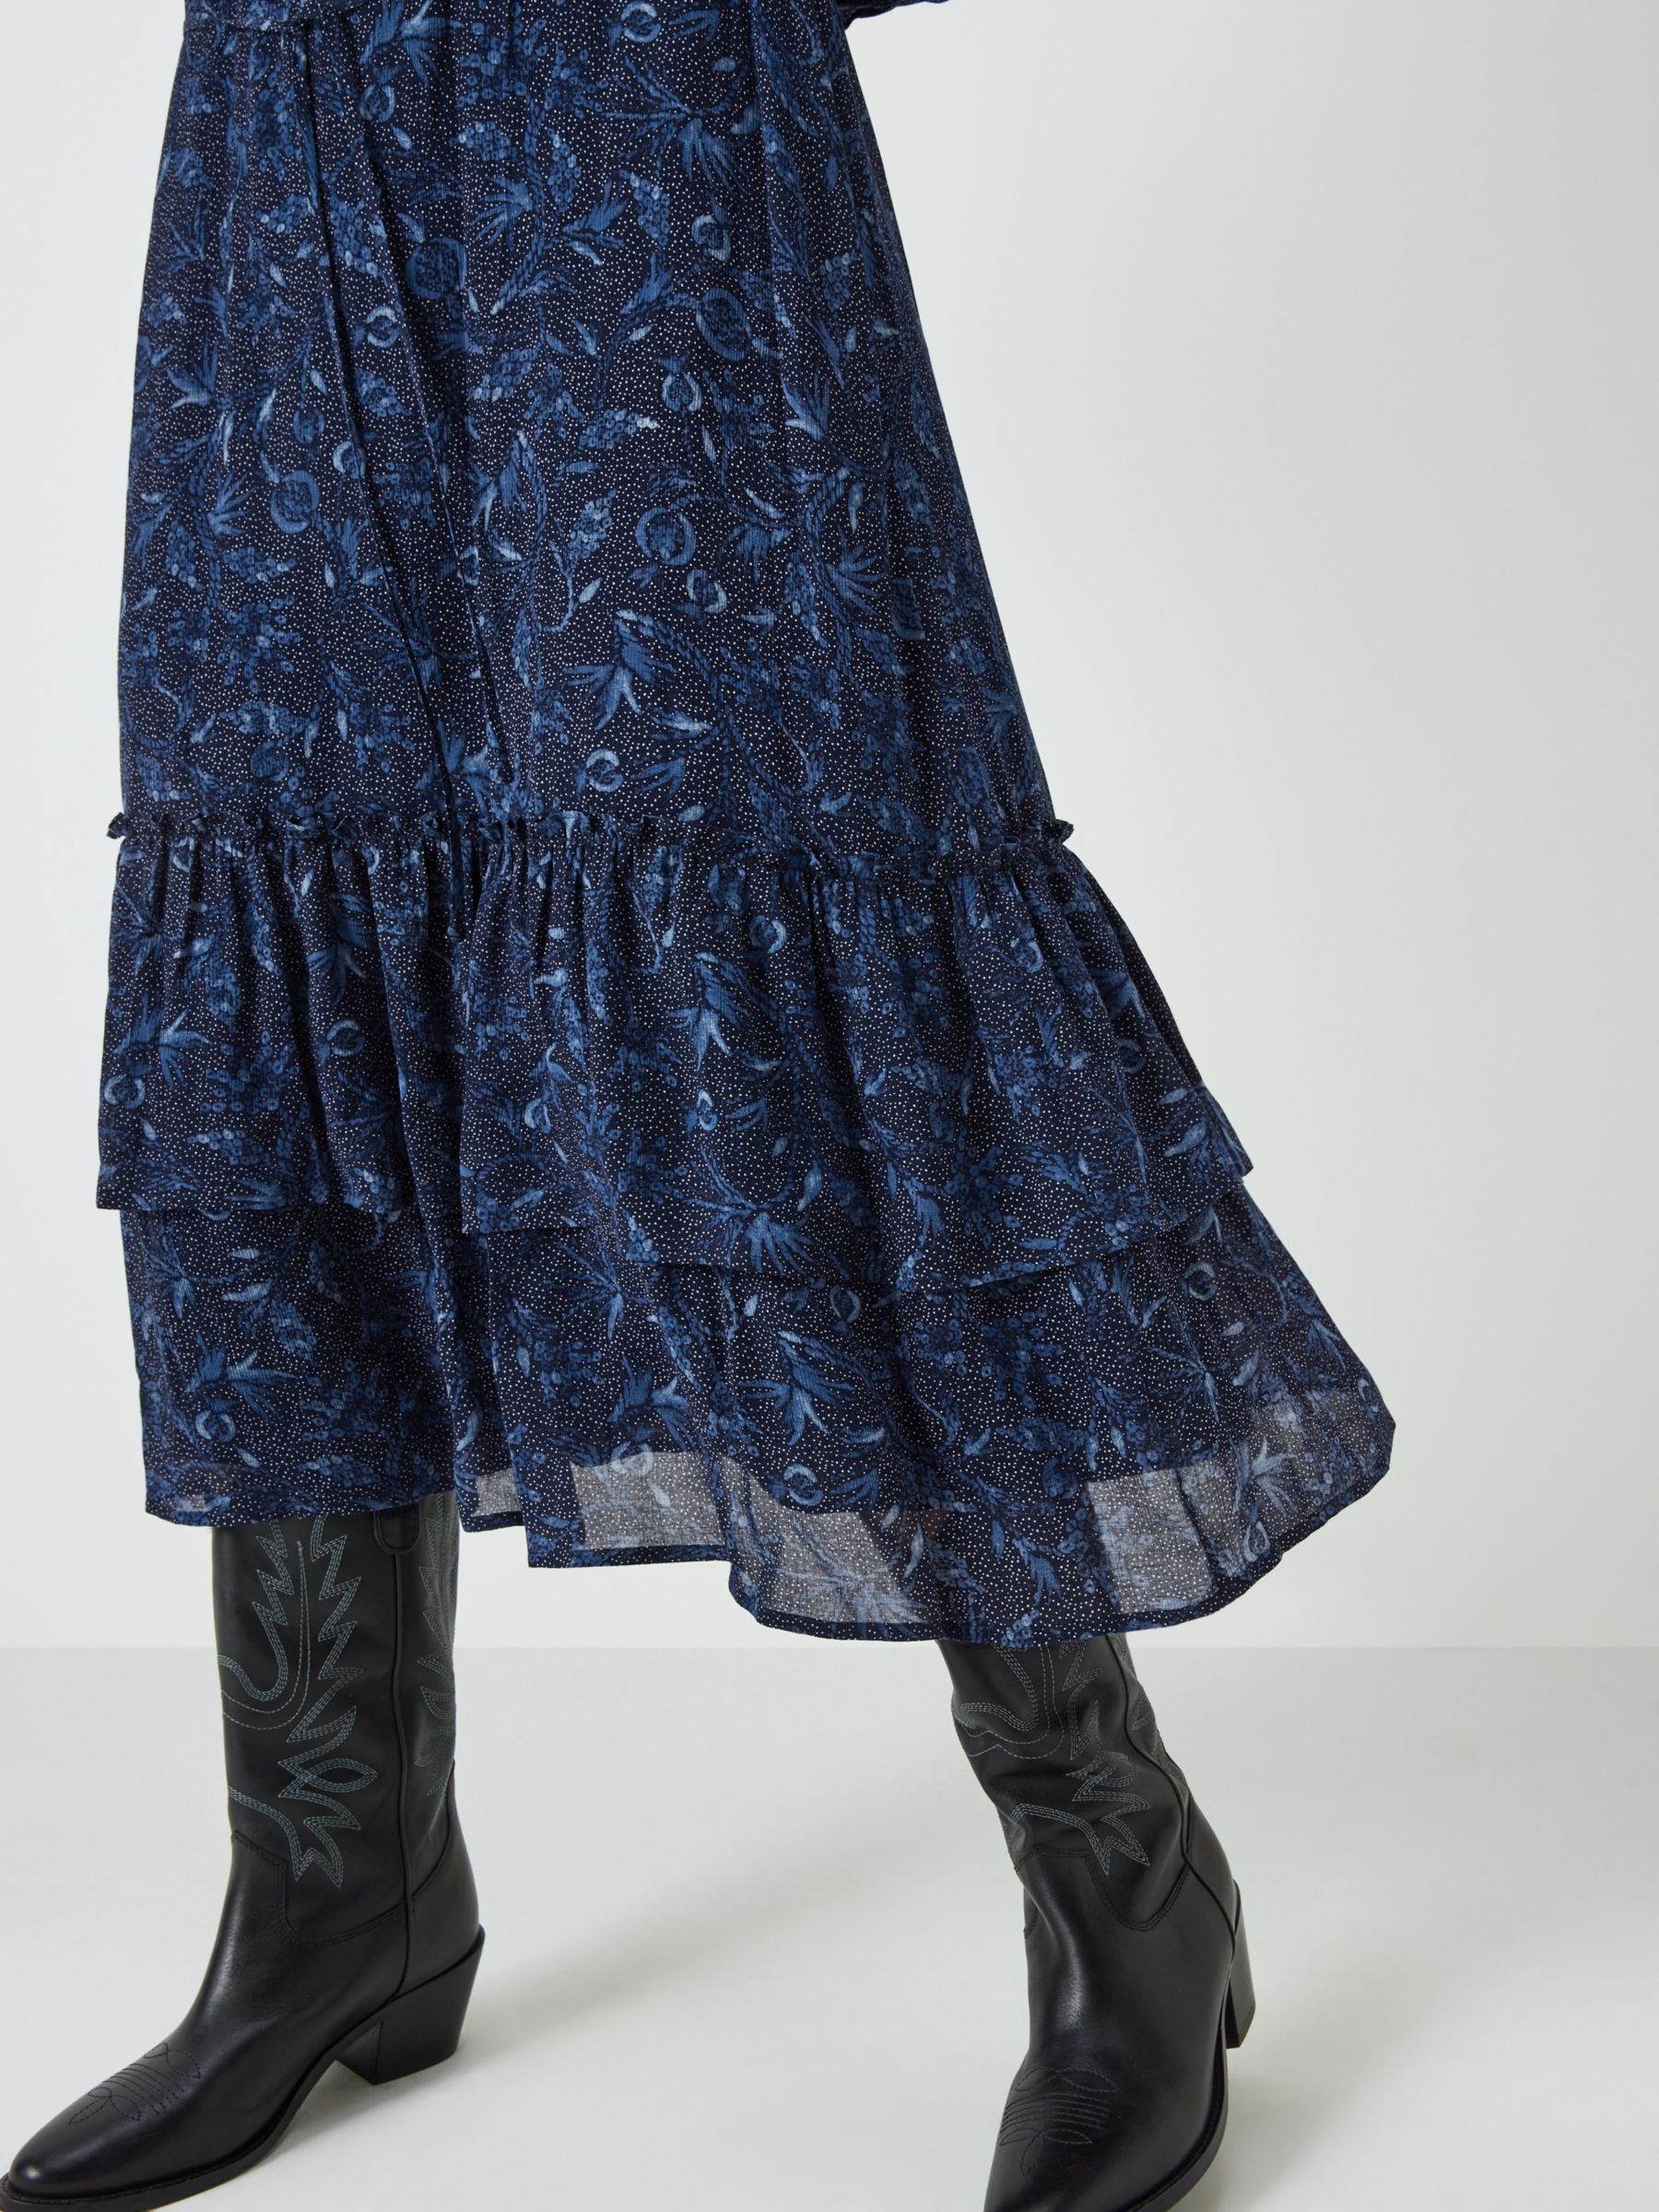 AND/OR Joanie Chiffon Floral Midi Dress, Blue, 6